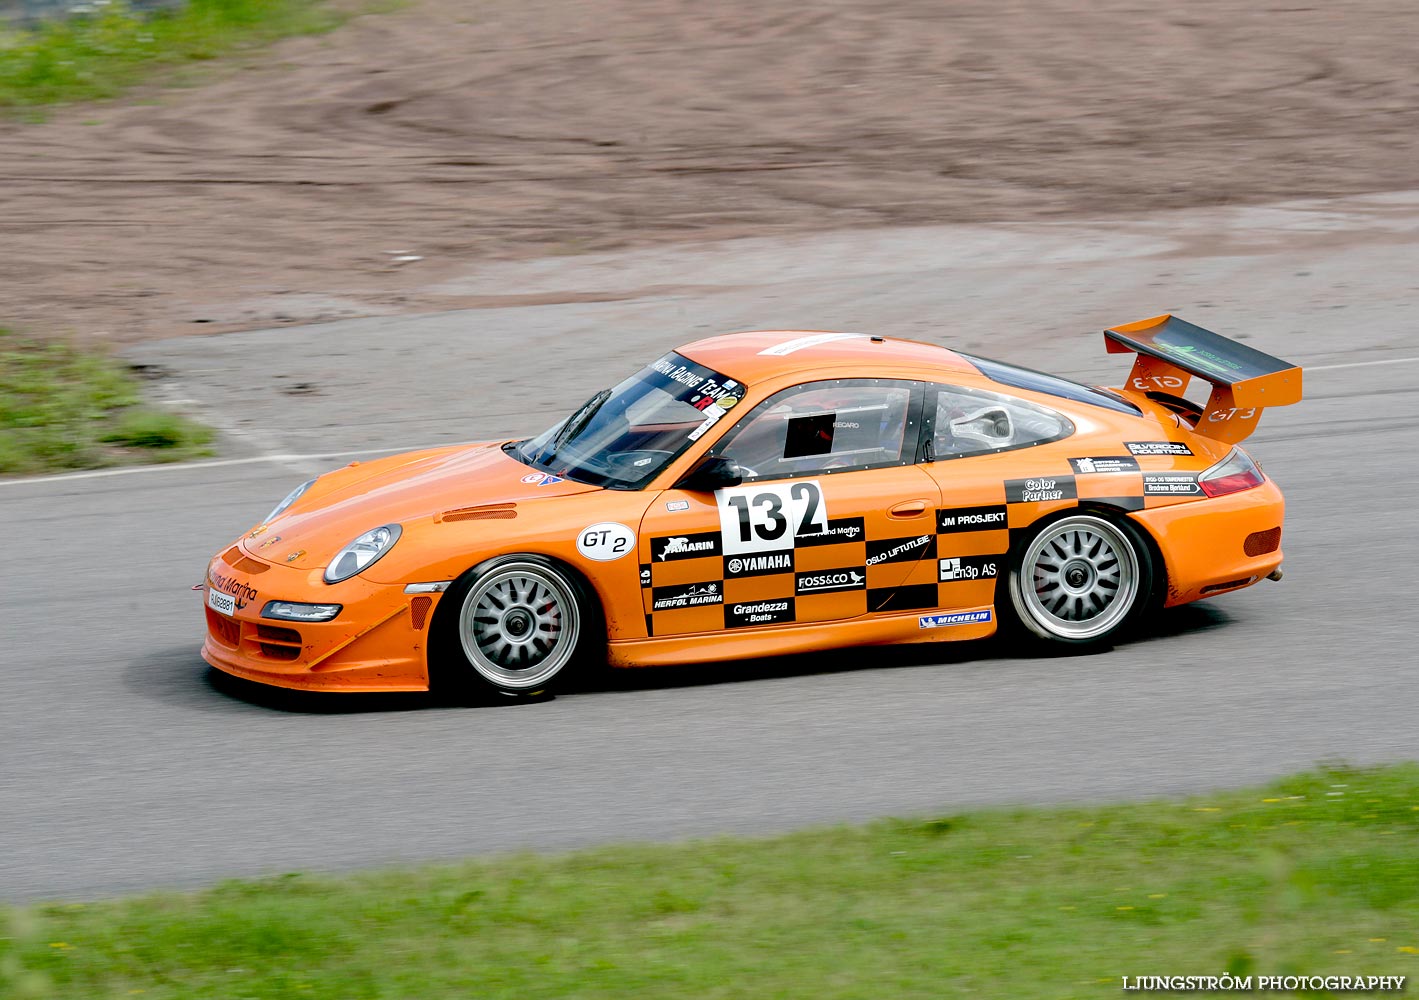 SSK Raceweek,mix,Kinnekulle Ring,Götene,Sverige,Motorsport,,2009,107506